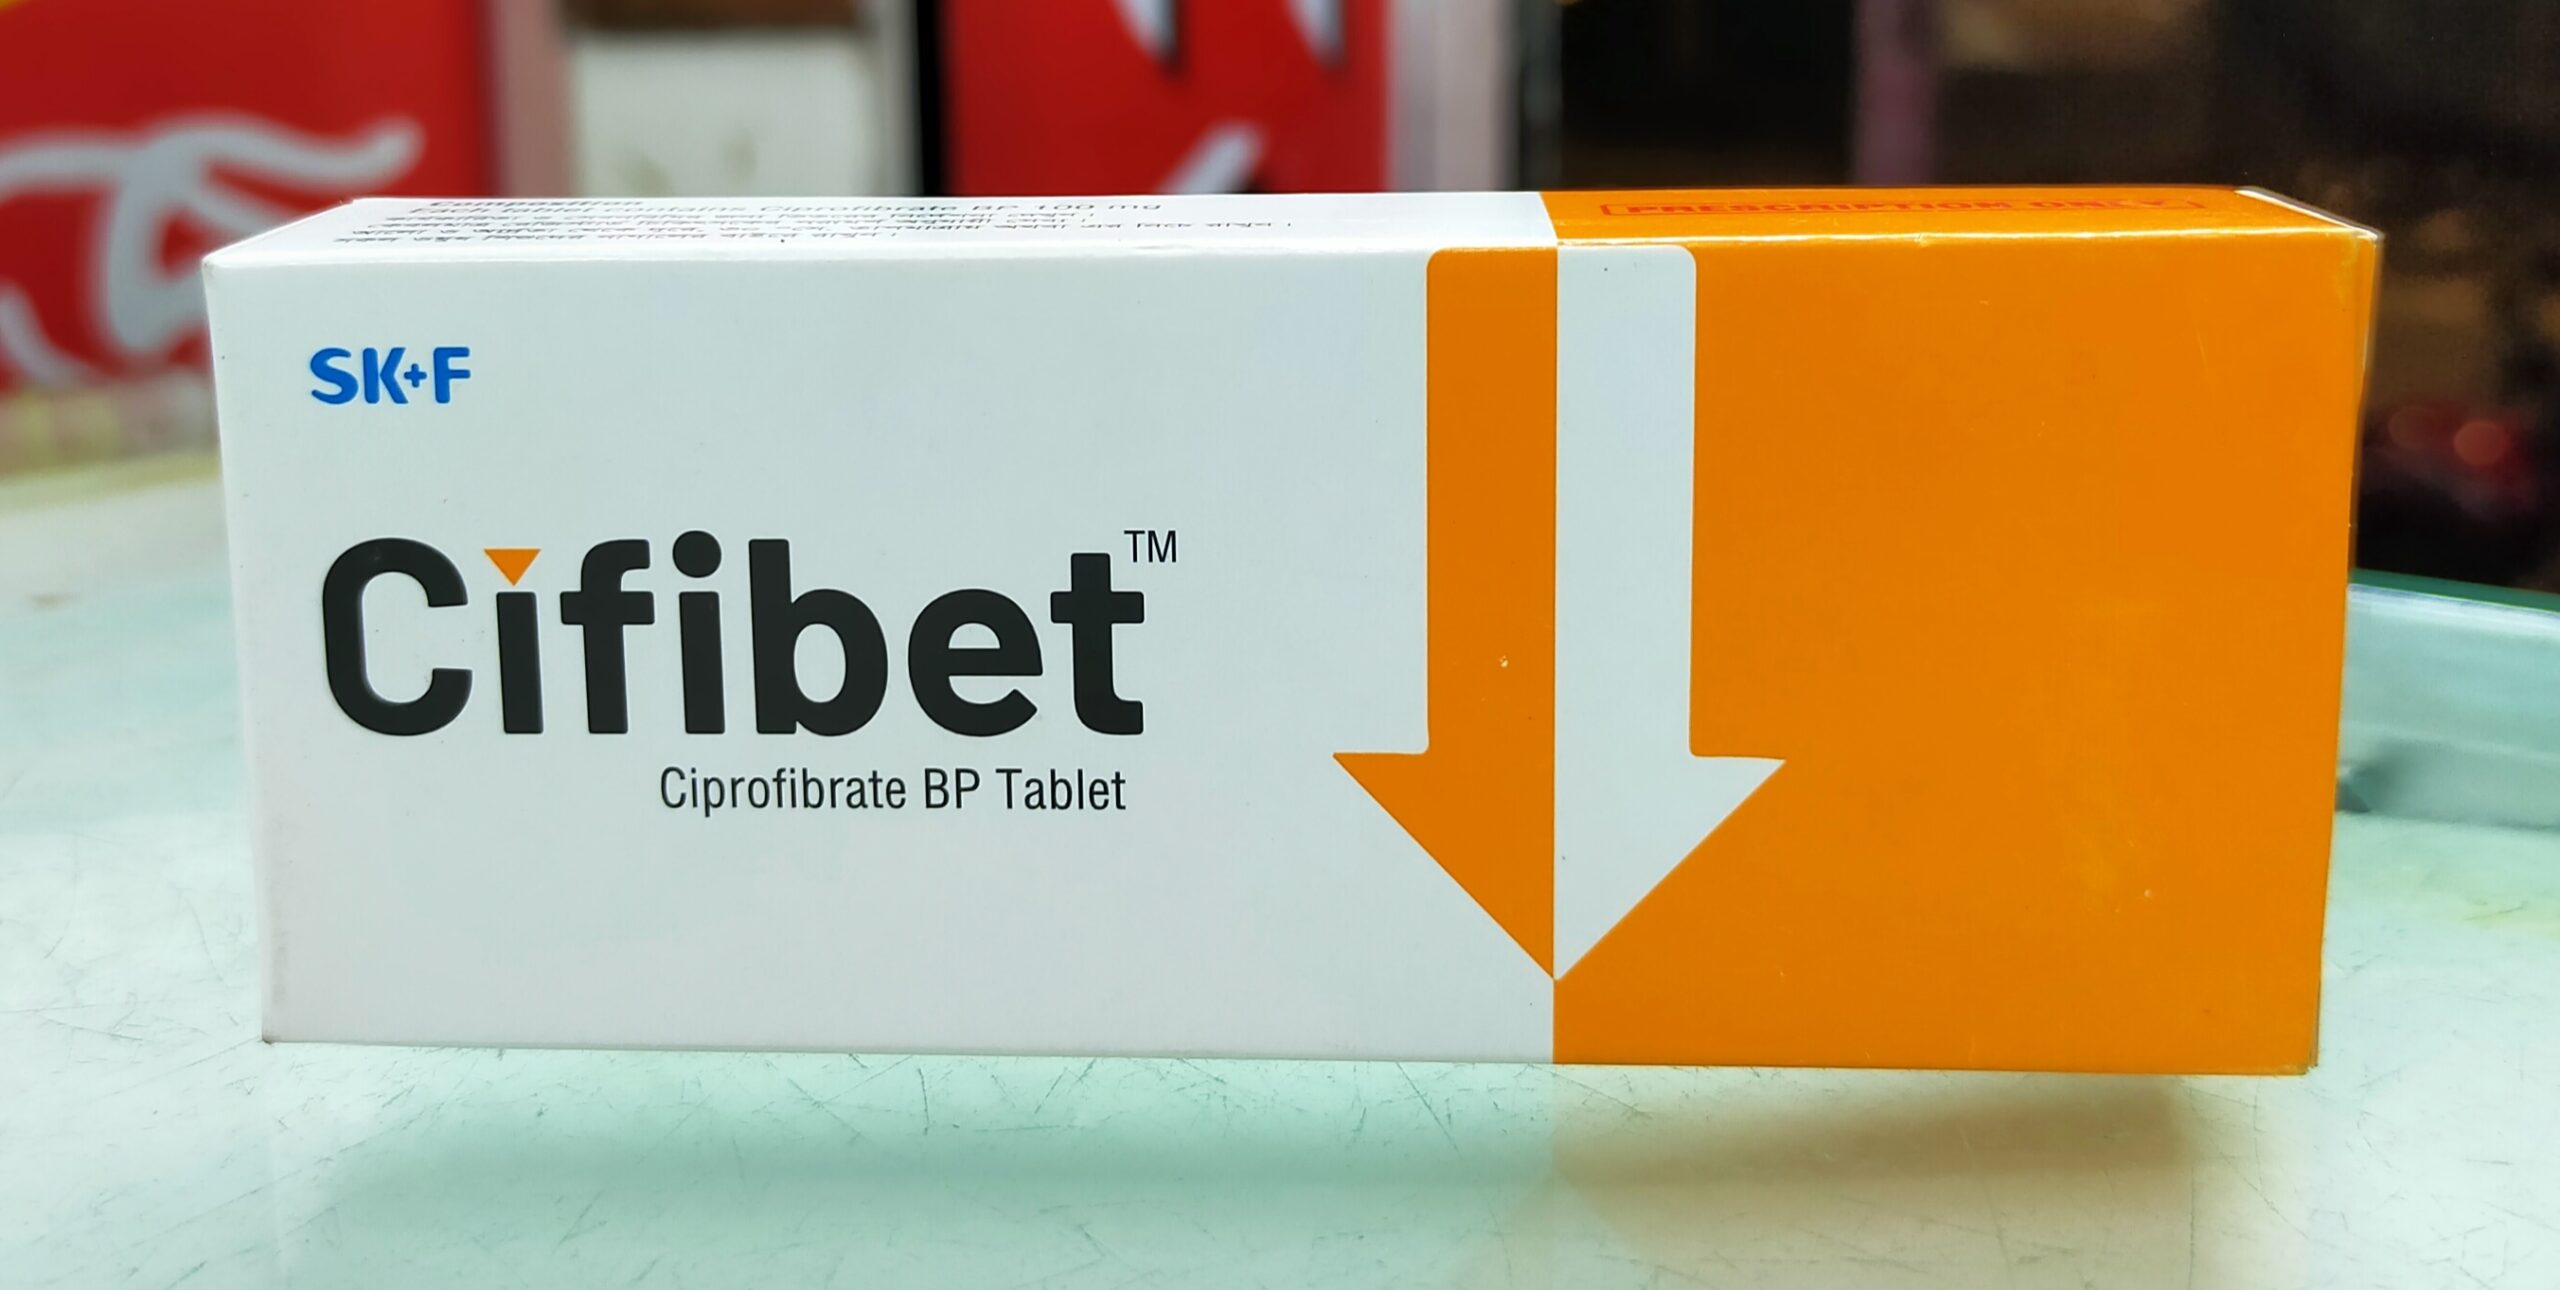 Cifibet 100 mg Tablet-30's Pkt